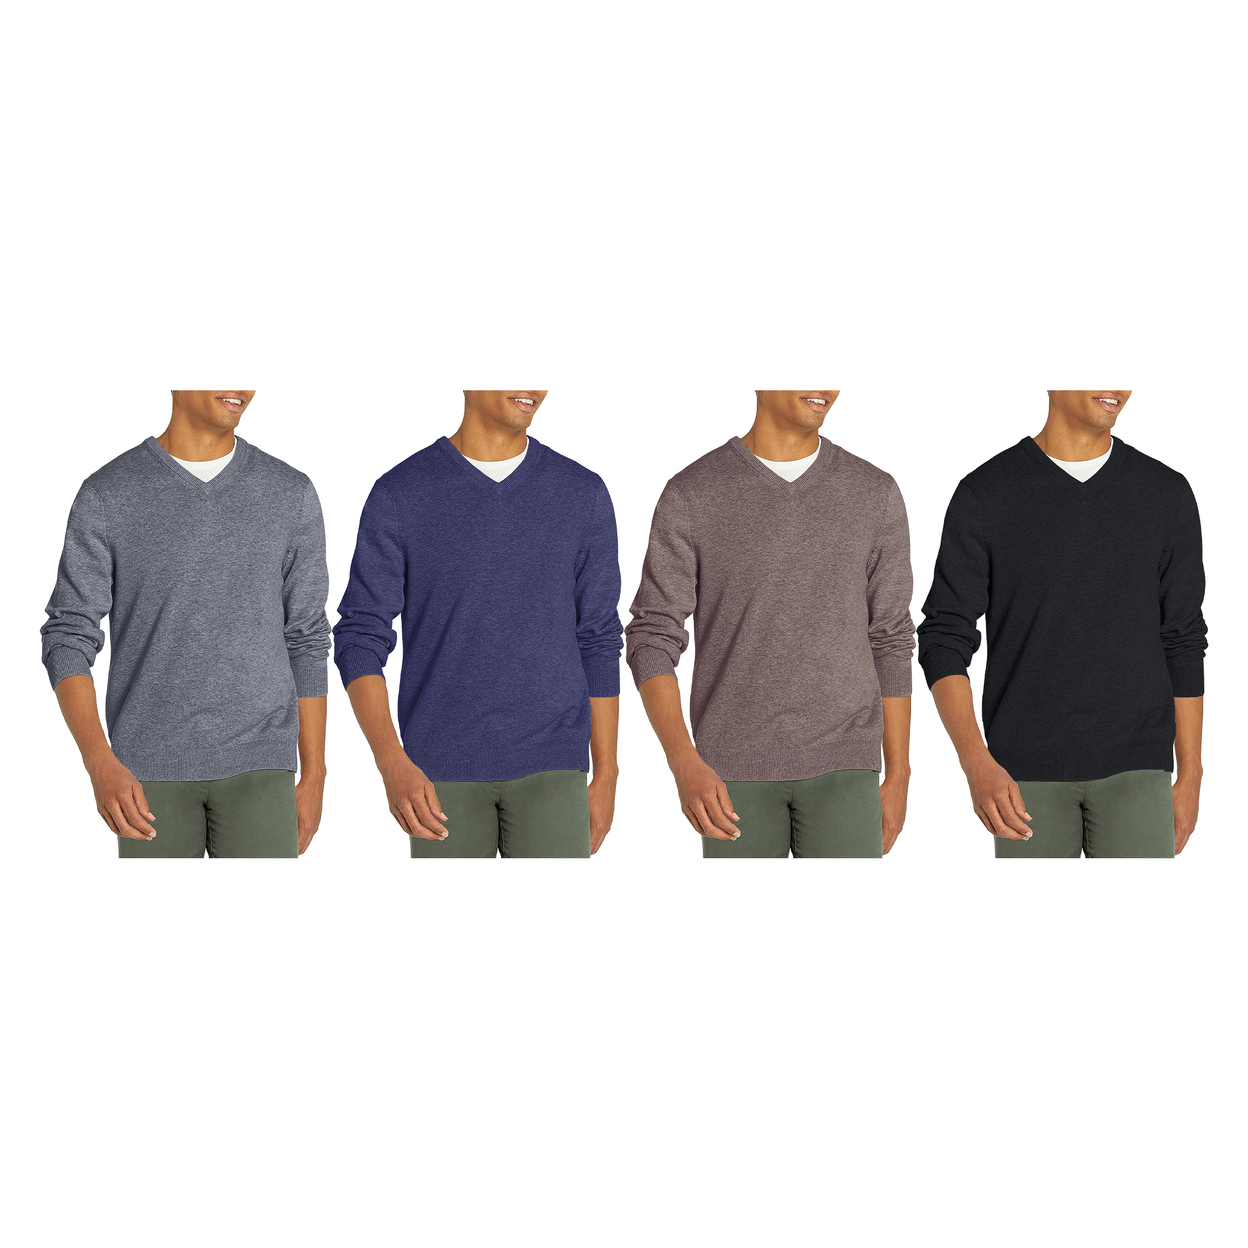 2-Pack: Men's Casual Ultra Soft Slim Fit Warm Knit V-Neck Sweater - Black & Grey, Large